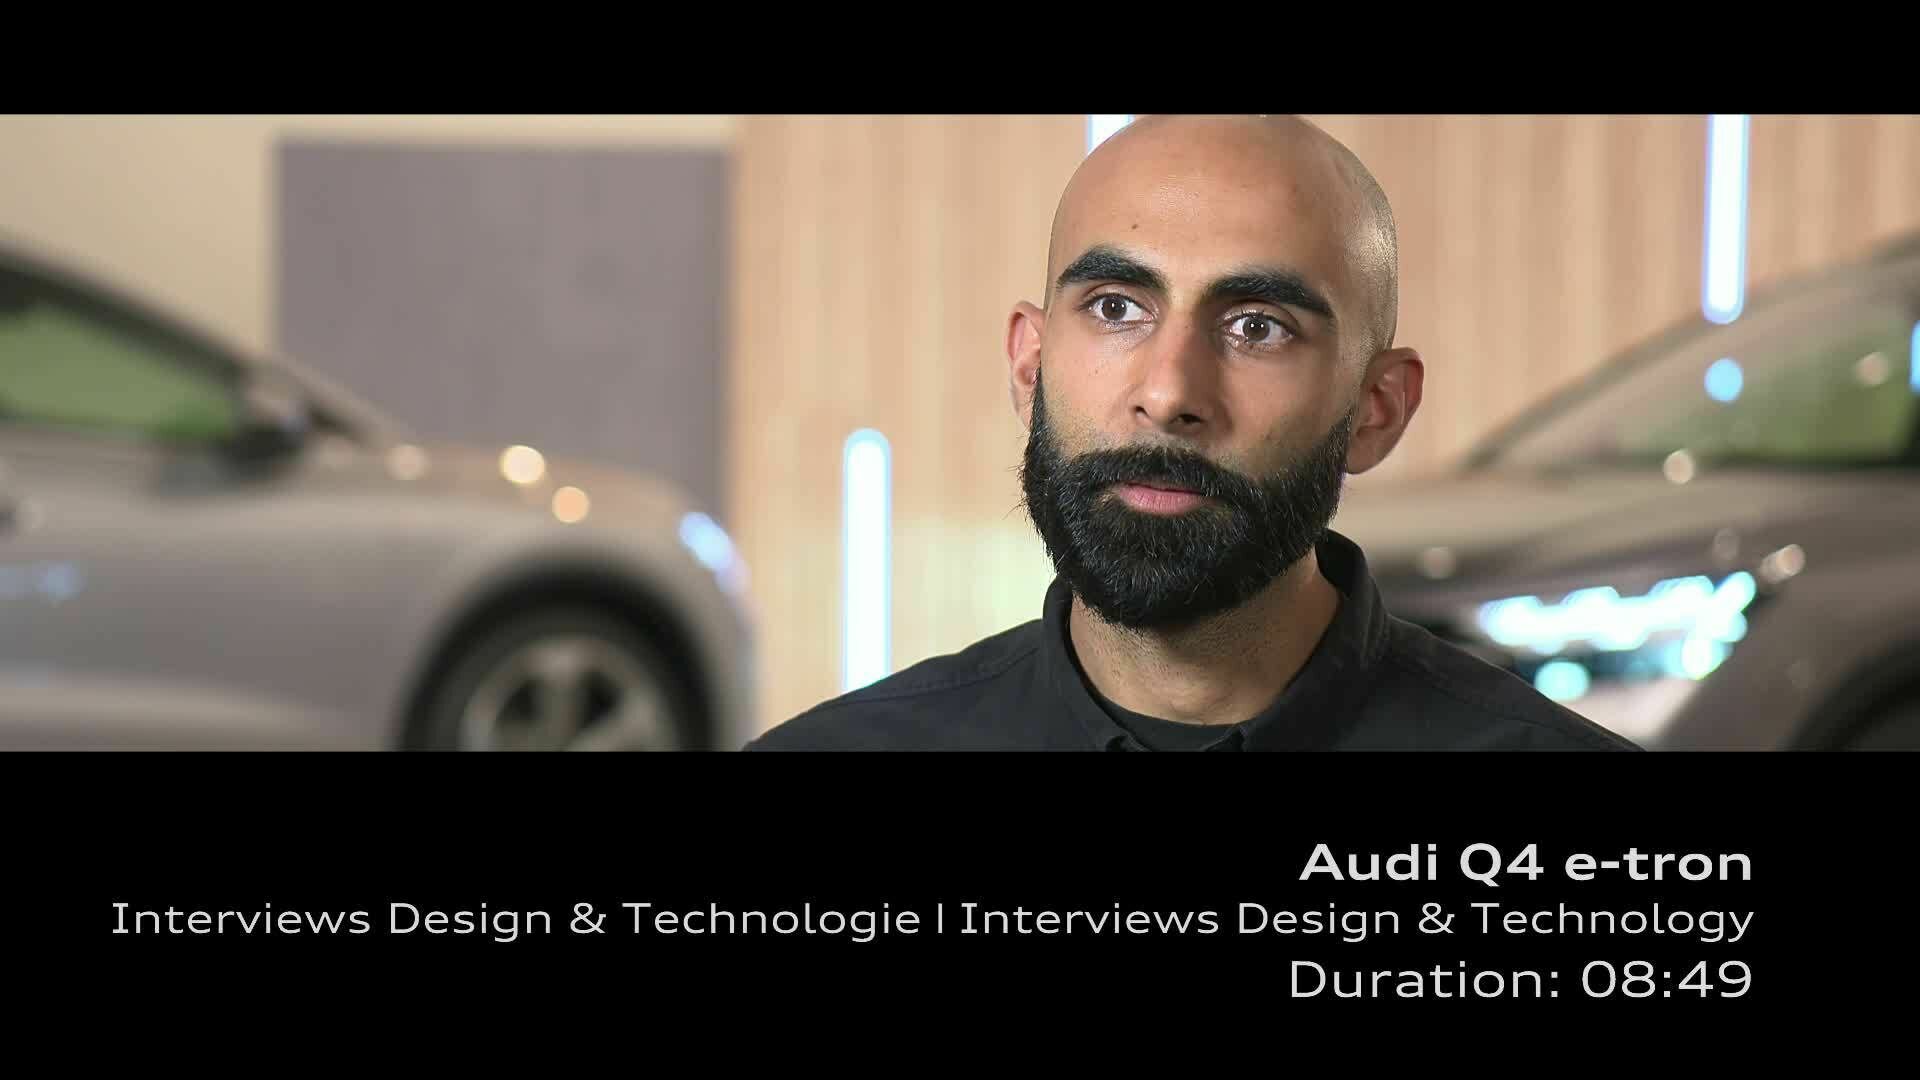 Footage: Expert interviews Audi Q4 e-tron